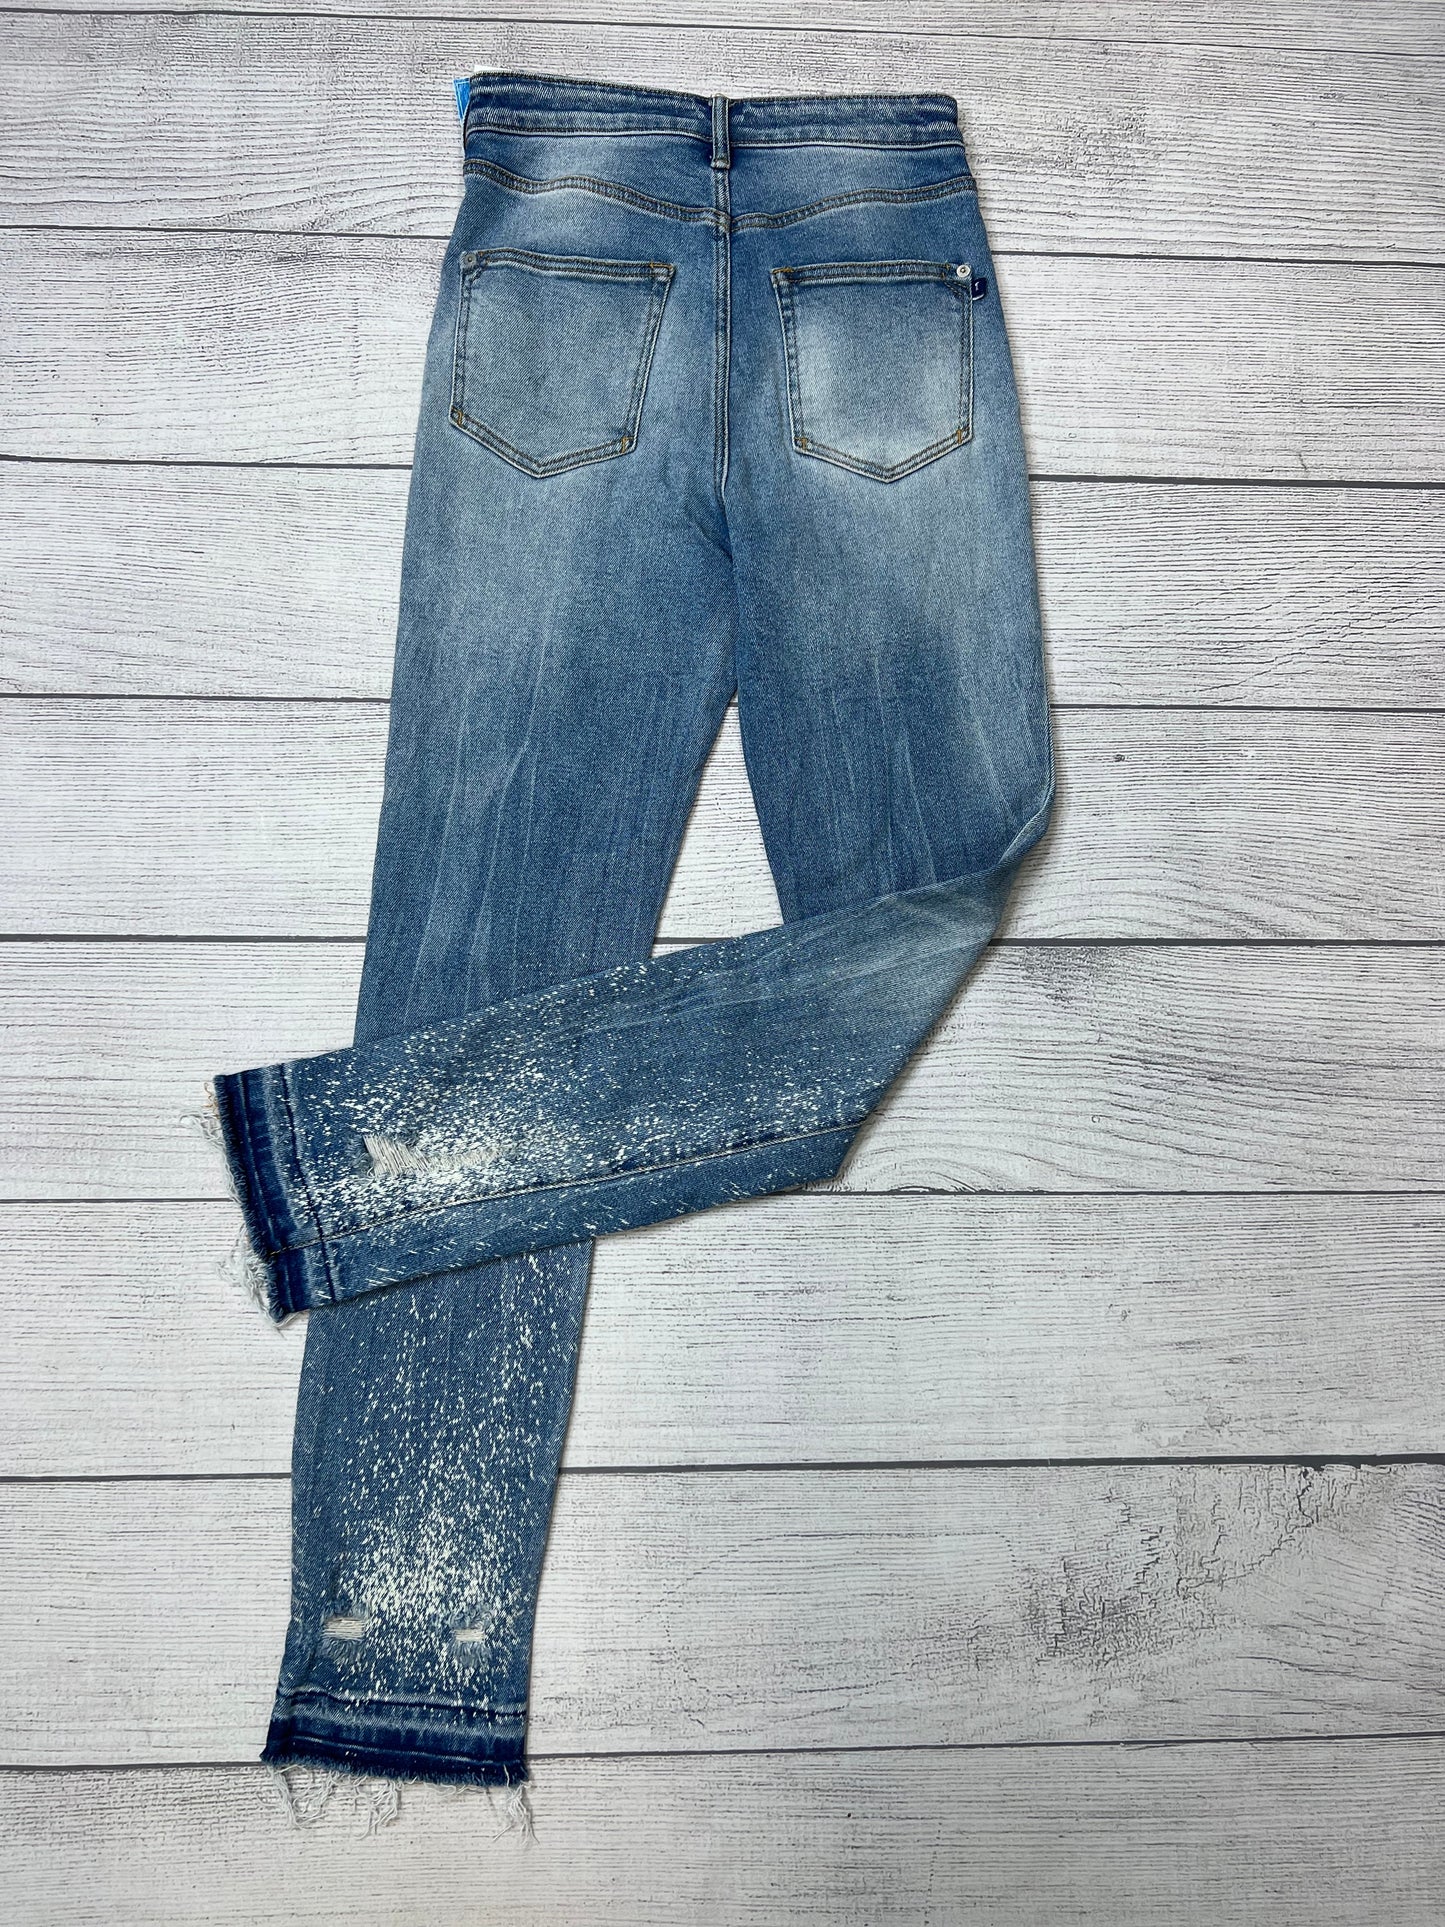 Jeans Designer By Pilcro  Size: 6